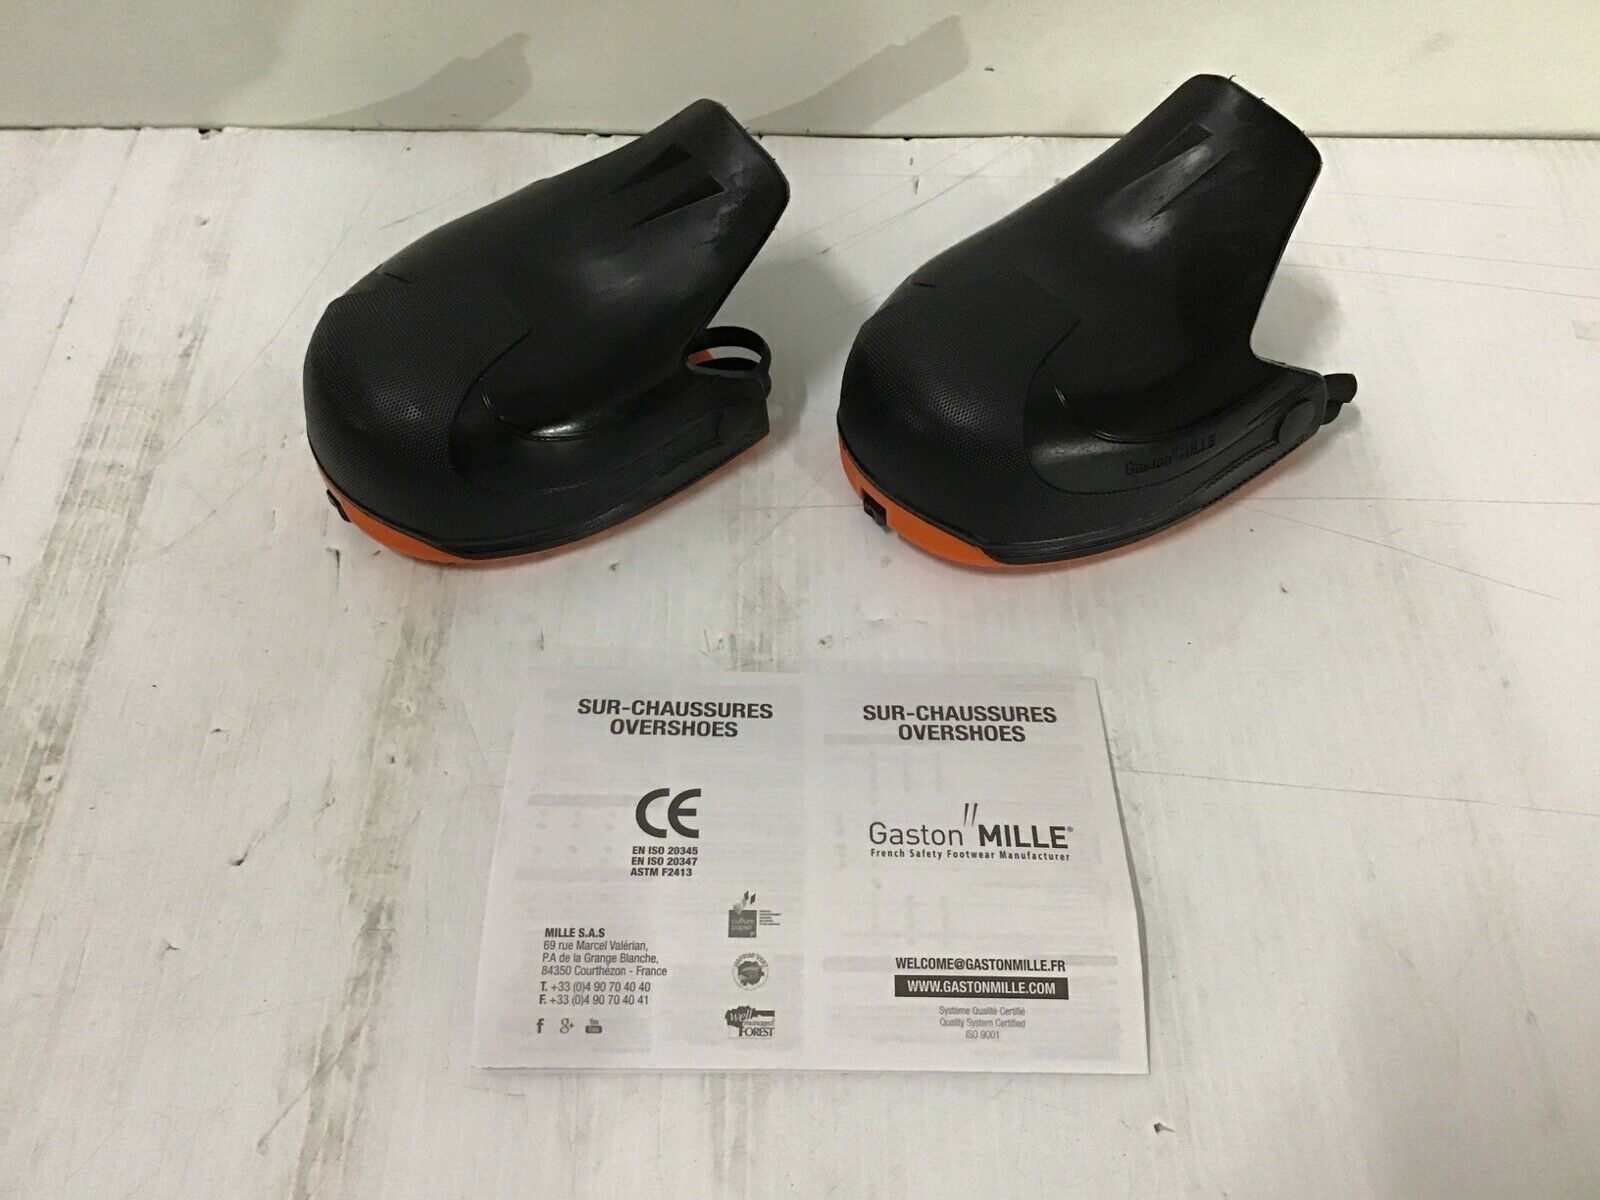 GASTON MILLE INC - Unisex, Overshoes Composite Toe Type MLPCL-M Black